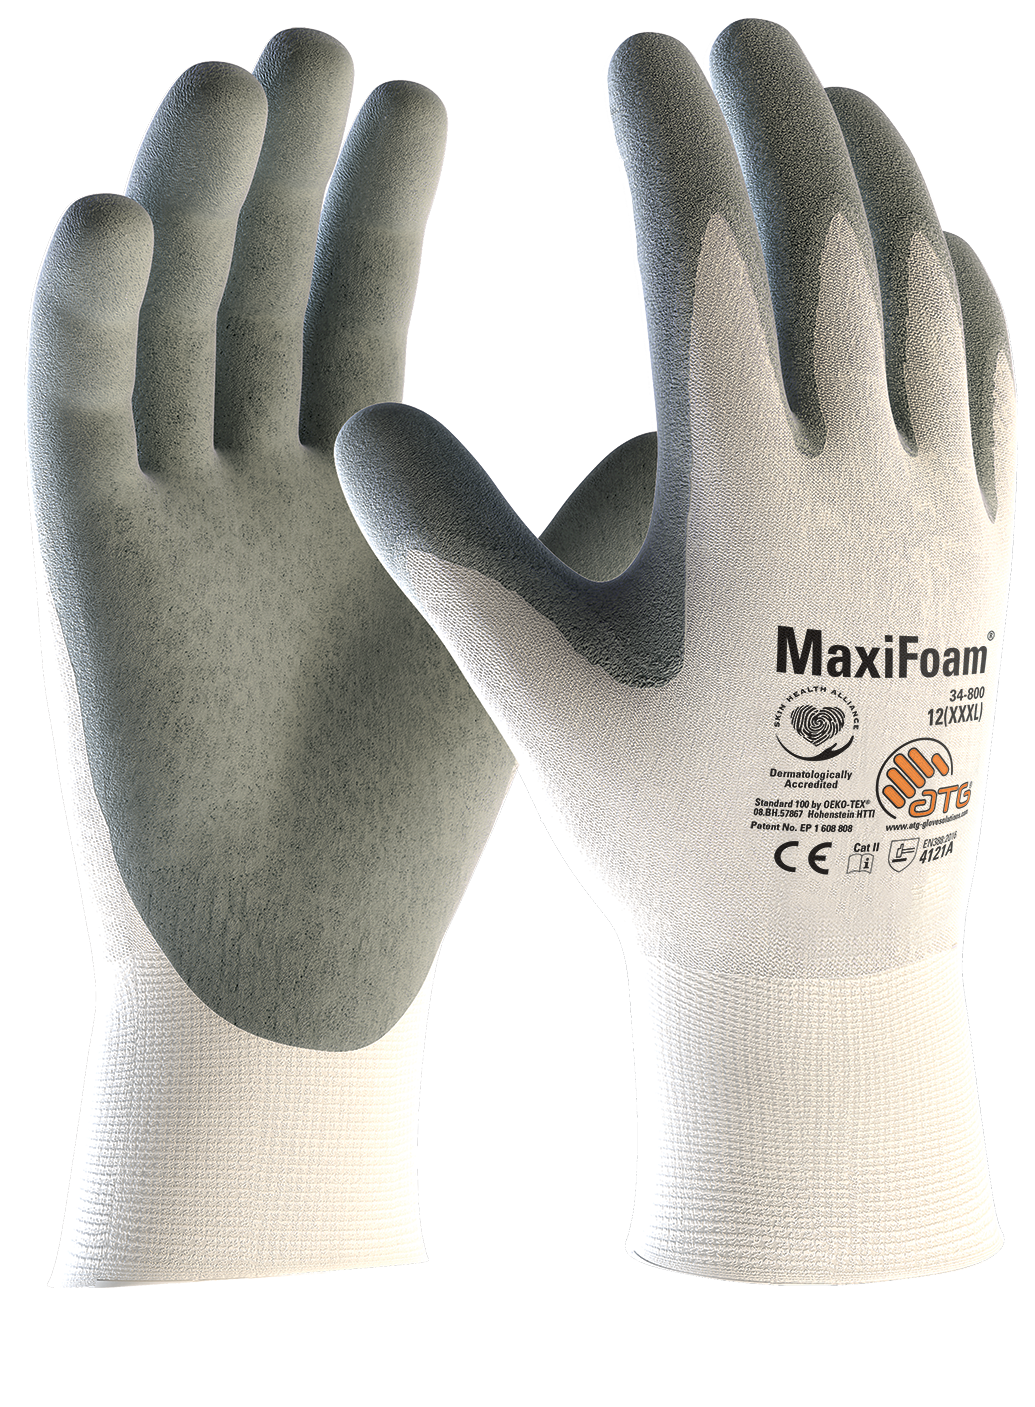 MaxiFoam® Nylon-Strickhandschuhe '(34-800)', 9 